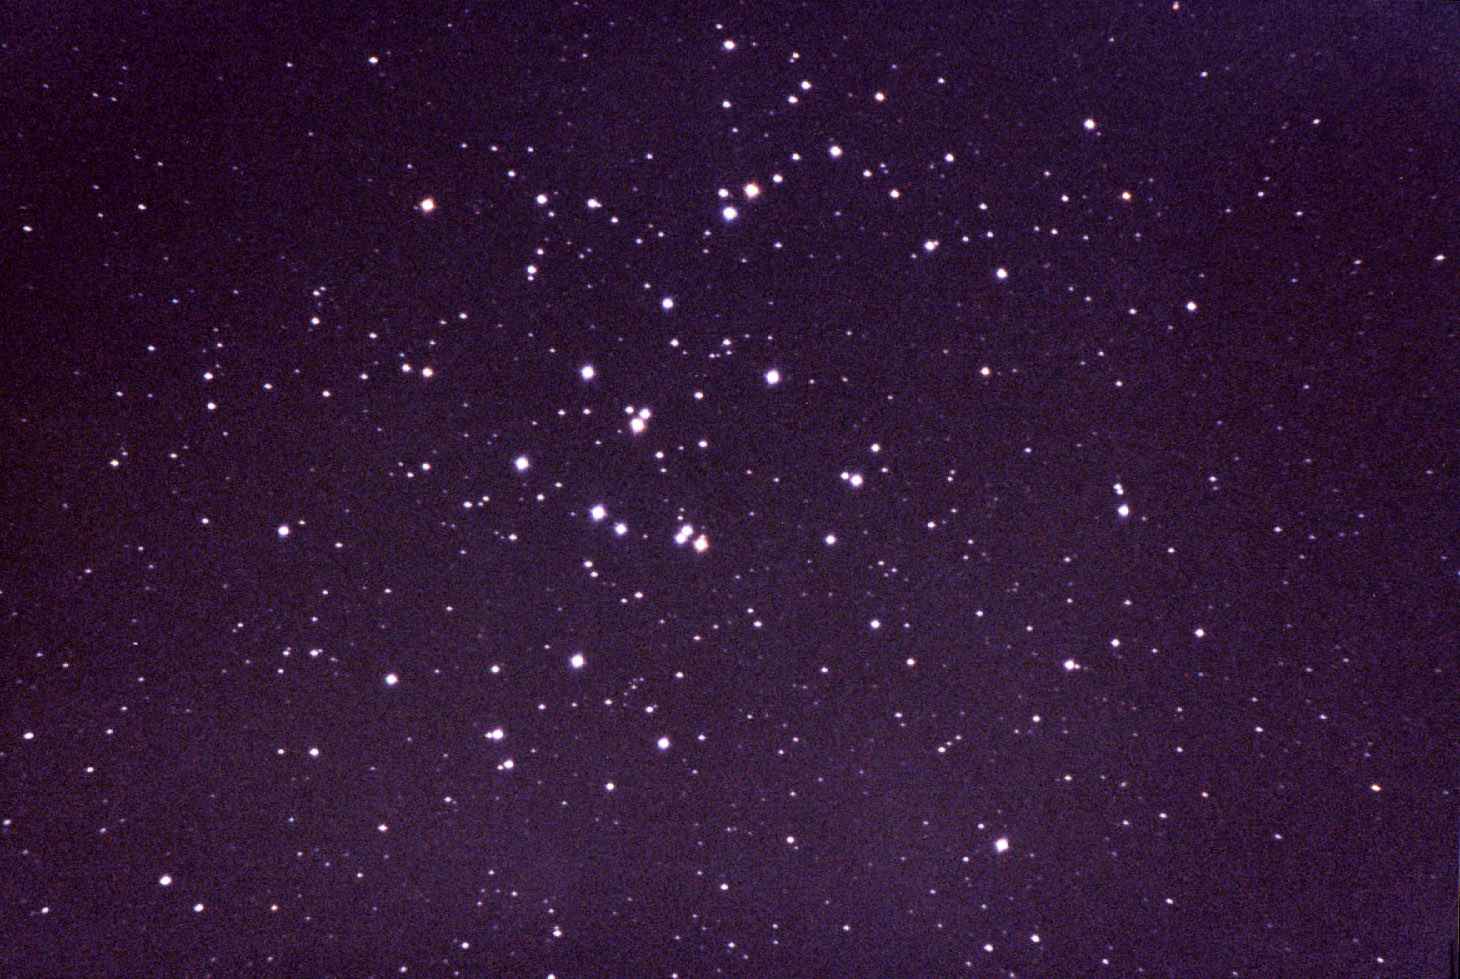 Open cluster M44: 119 KB